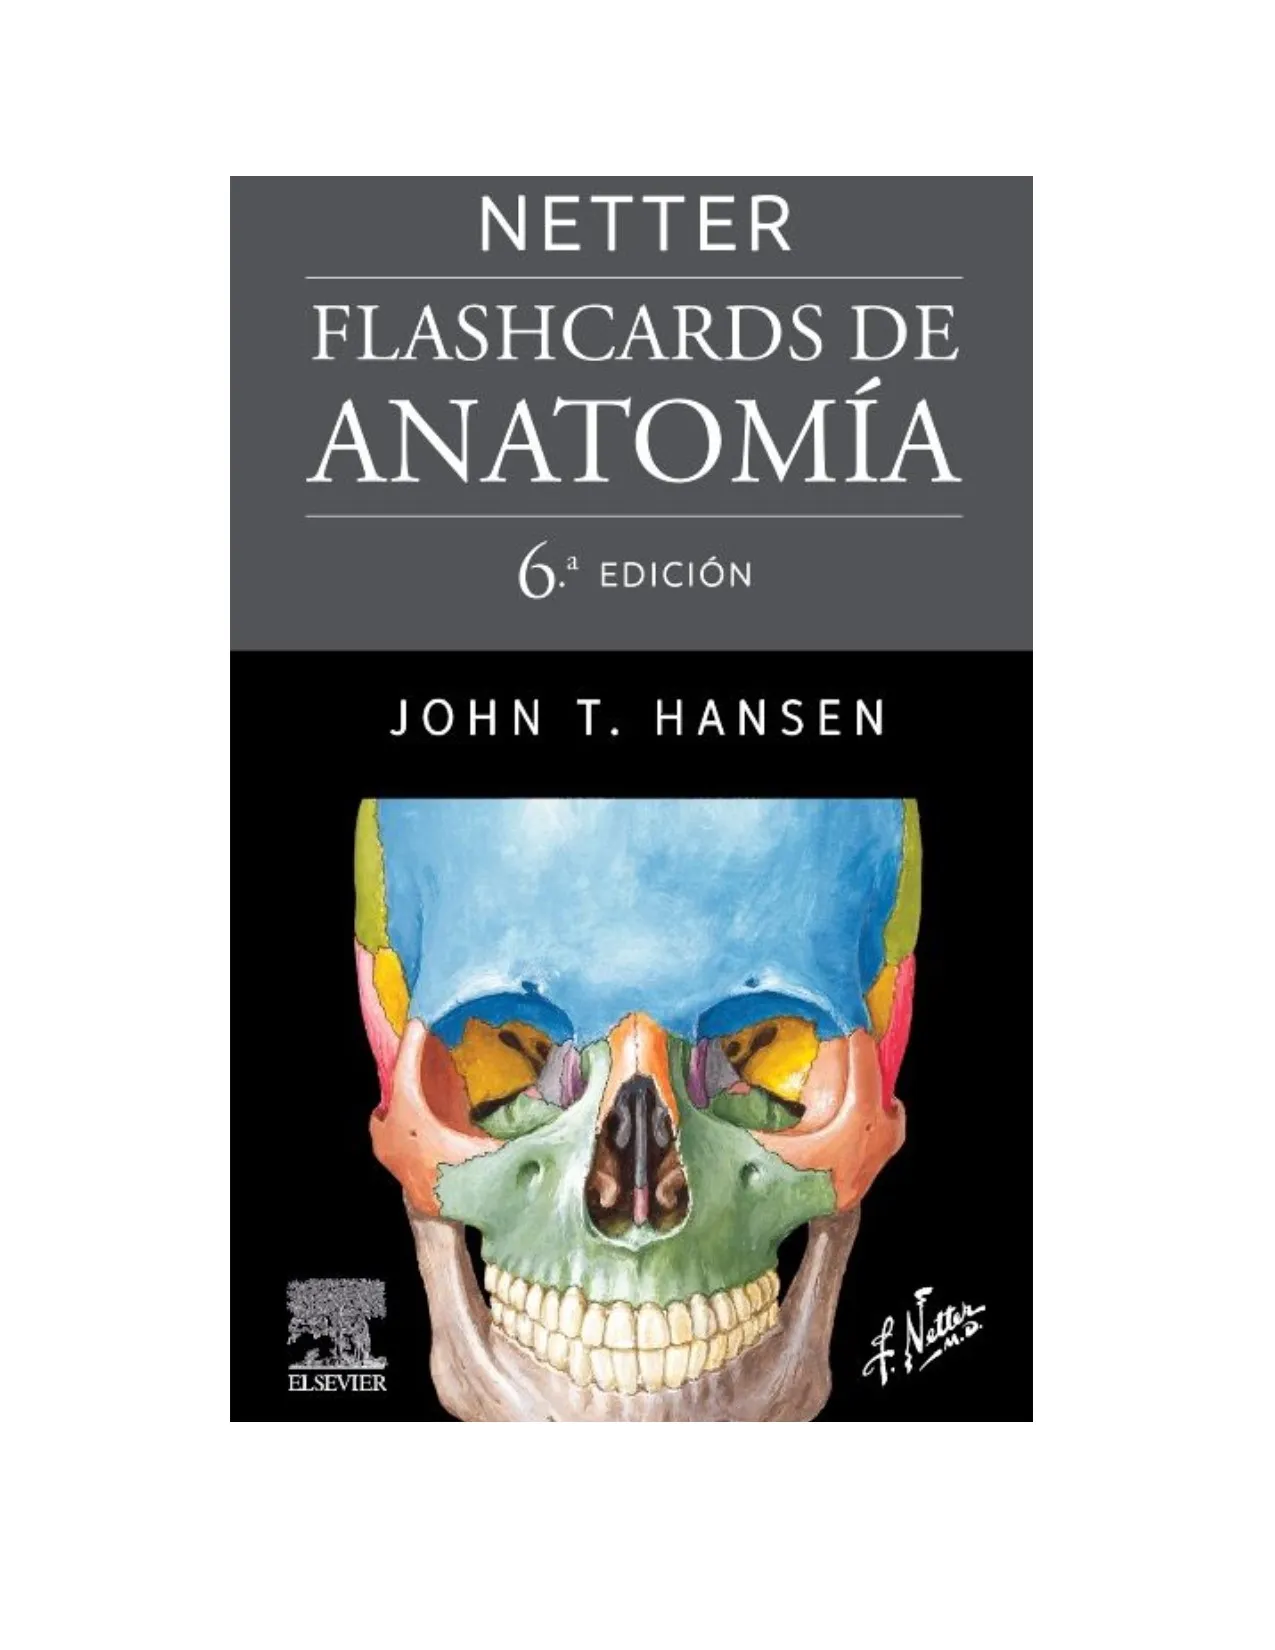 Flashcards de Anatomía Netter